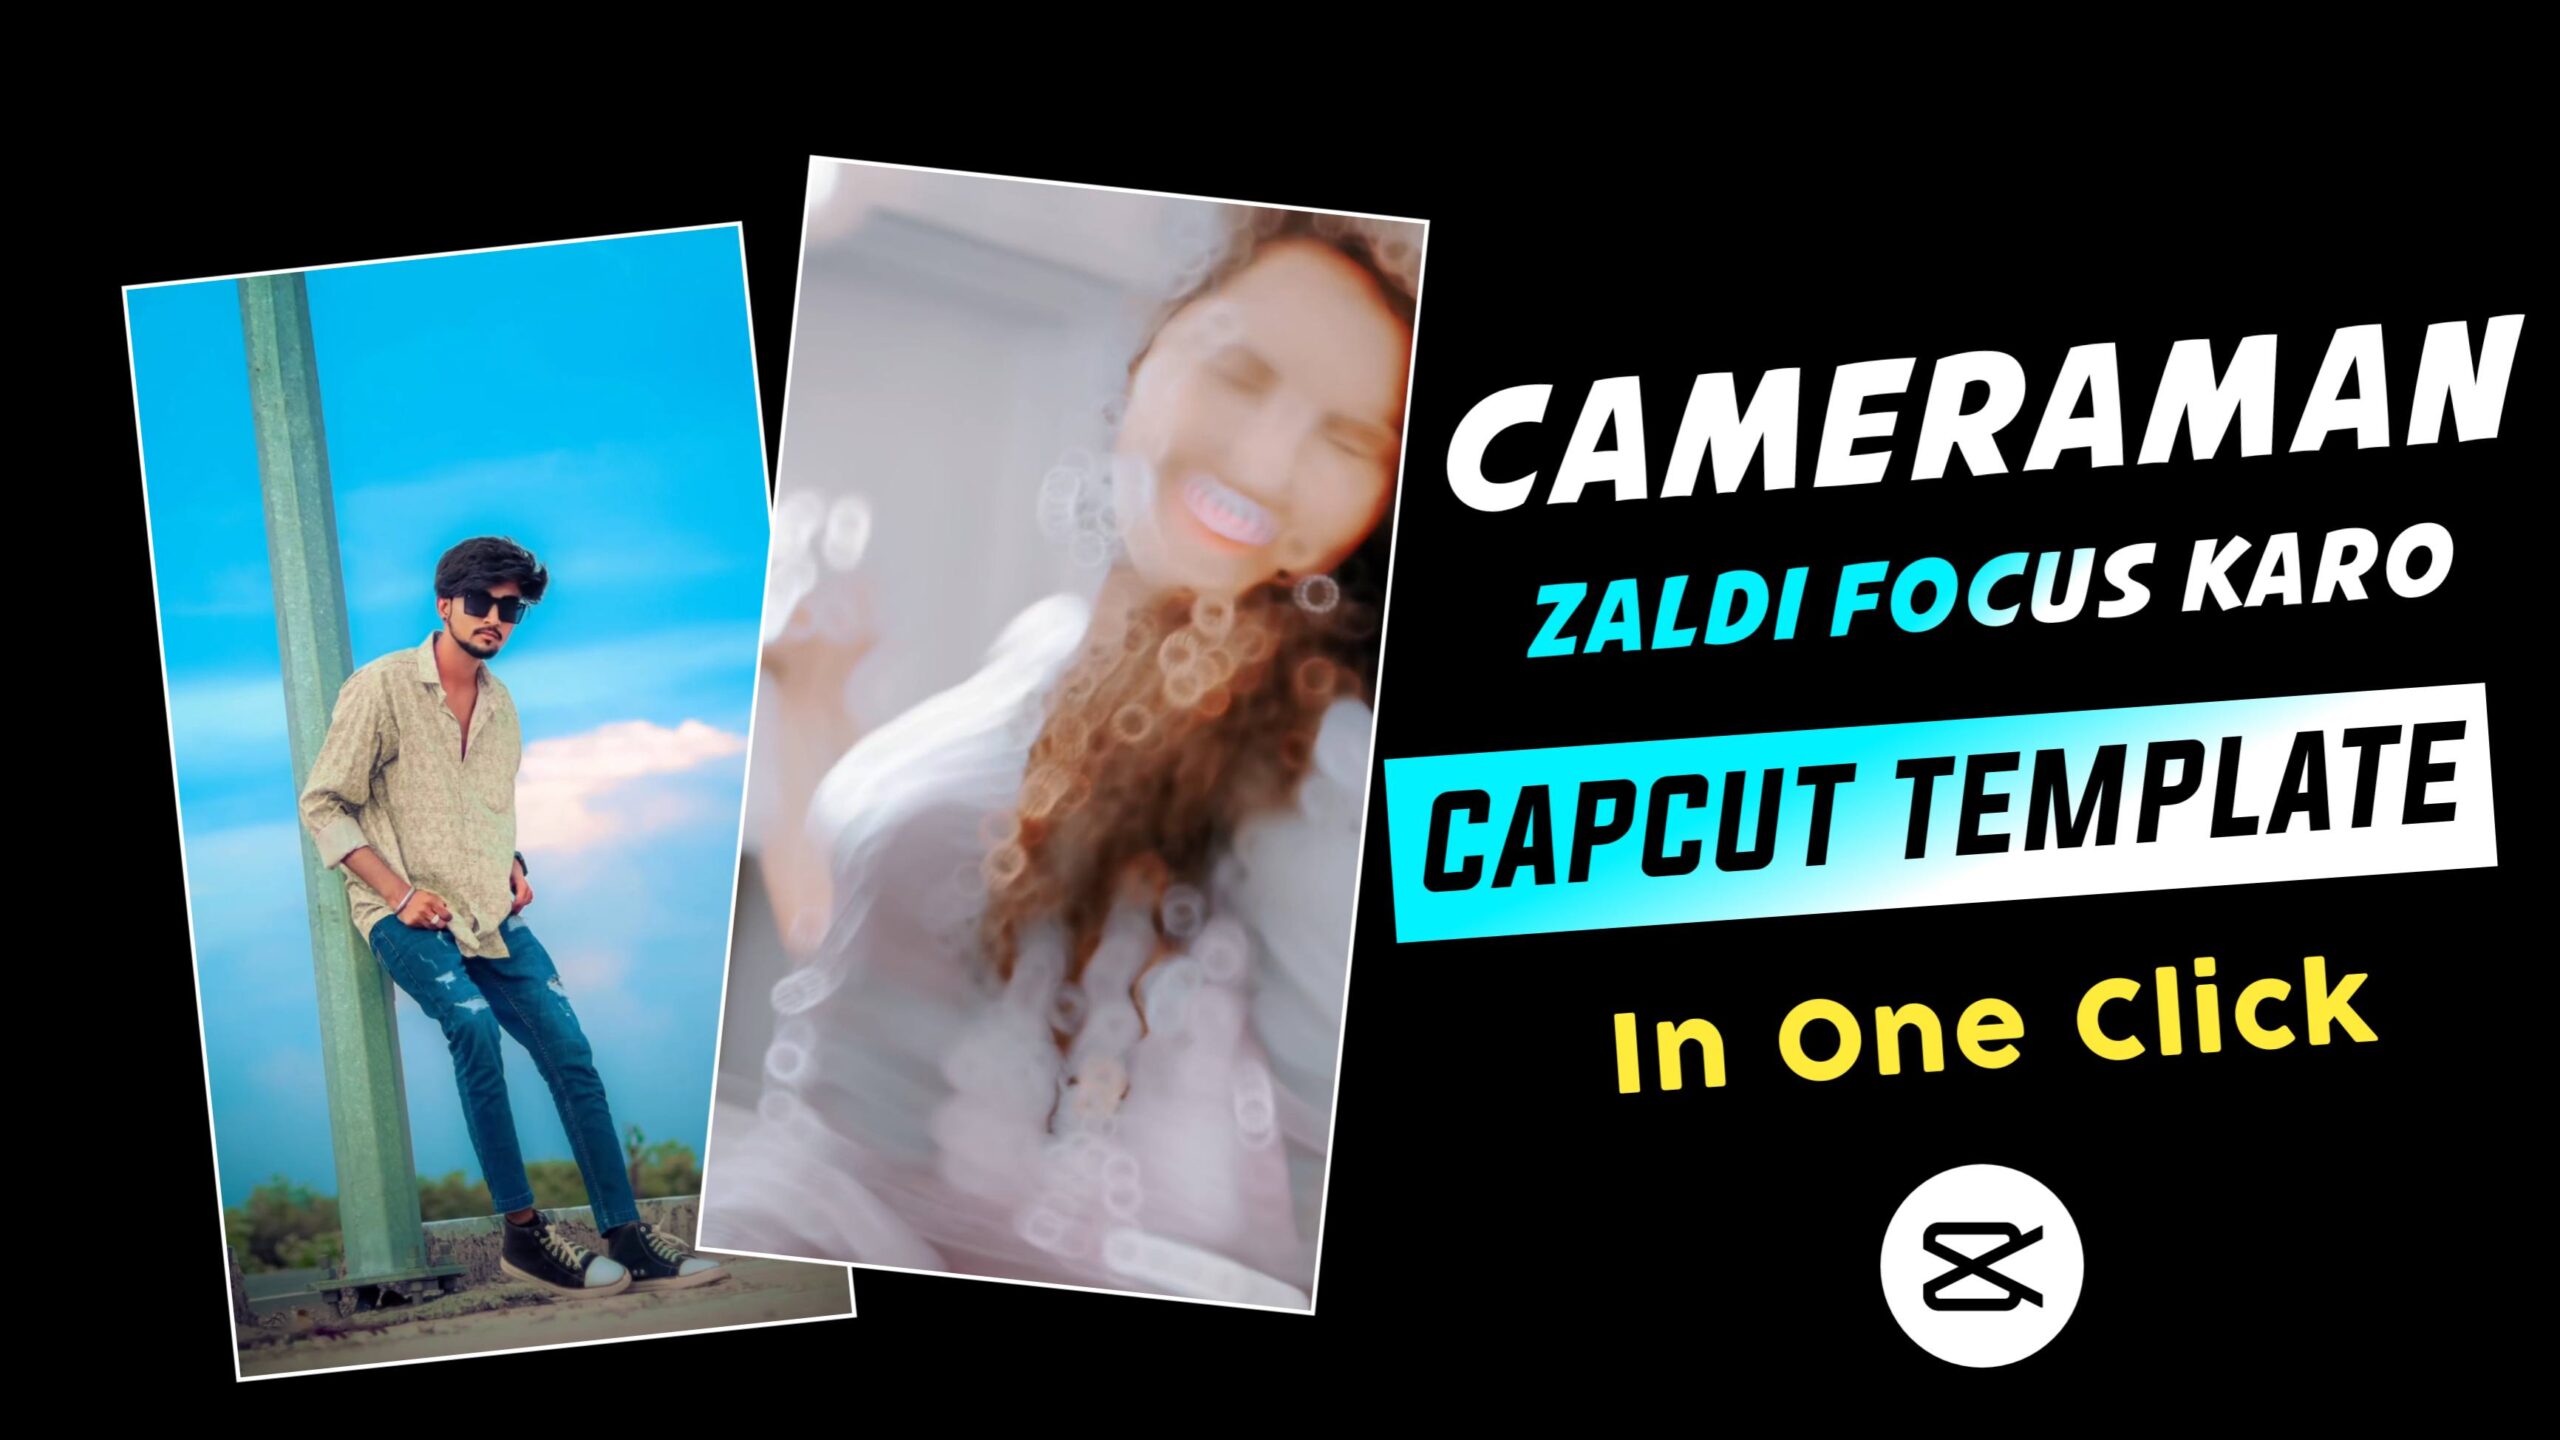 Cameraman Jaldi Focus Karo CapCut Template Link 2023